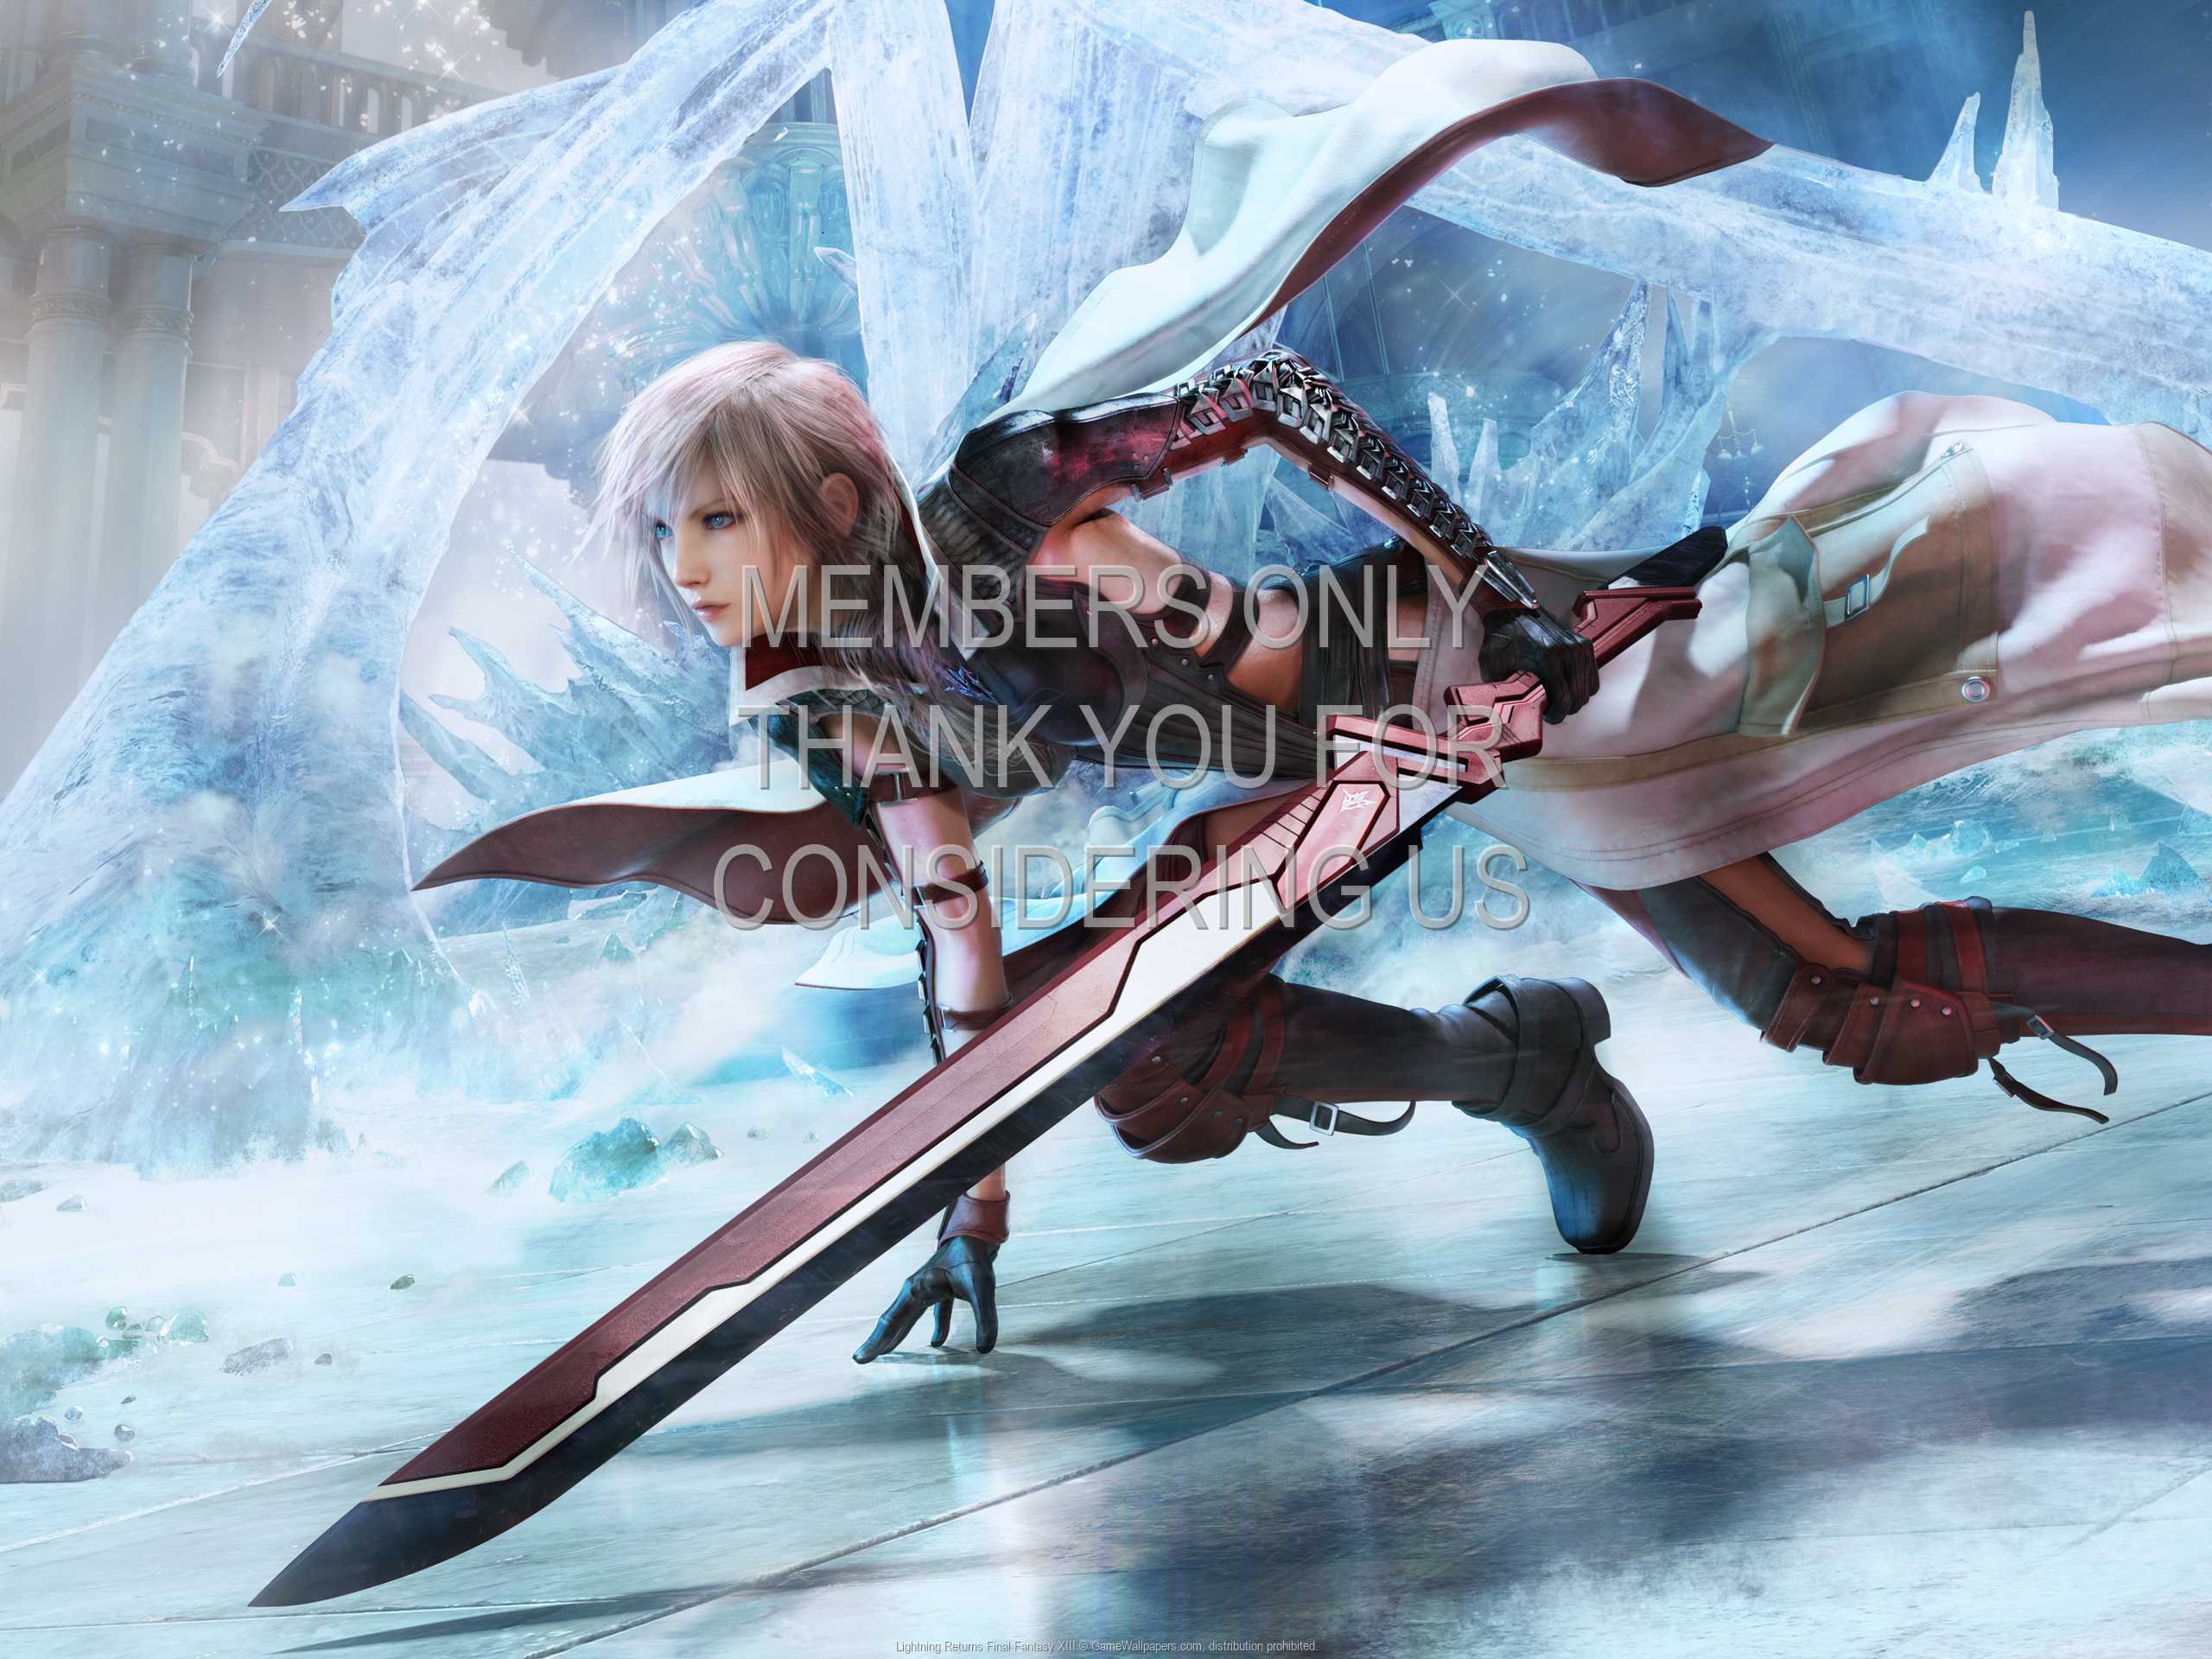 Lightning Returns: Final Fantasy XIII 1080p Horizontal Mobile wallpaper or background 02